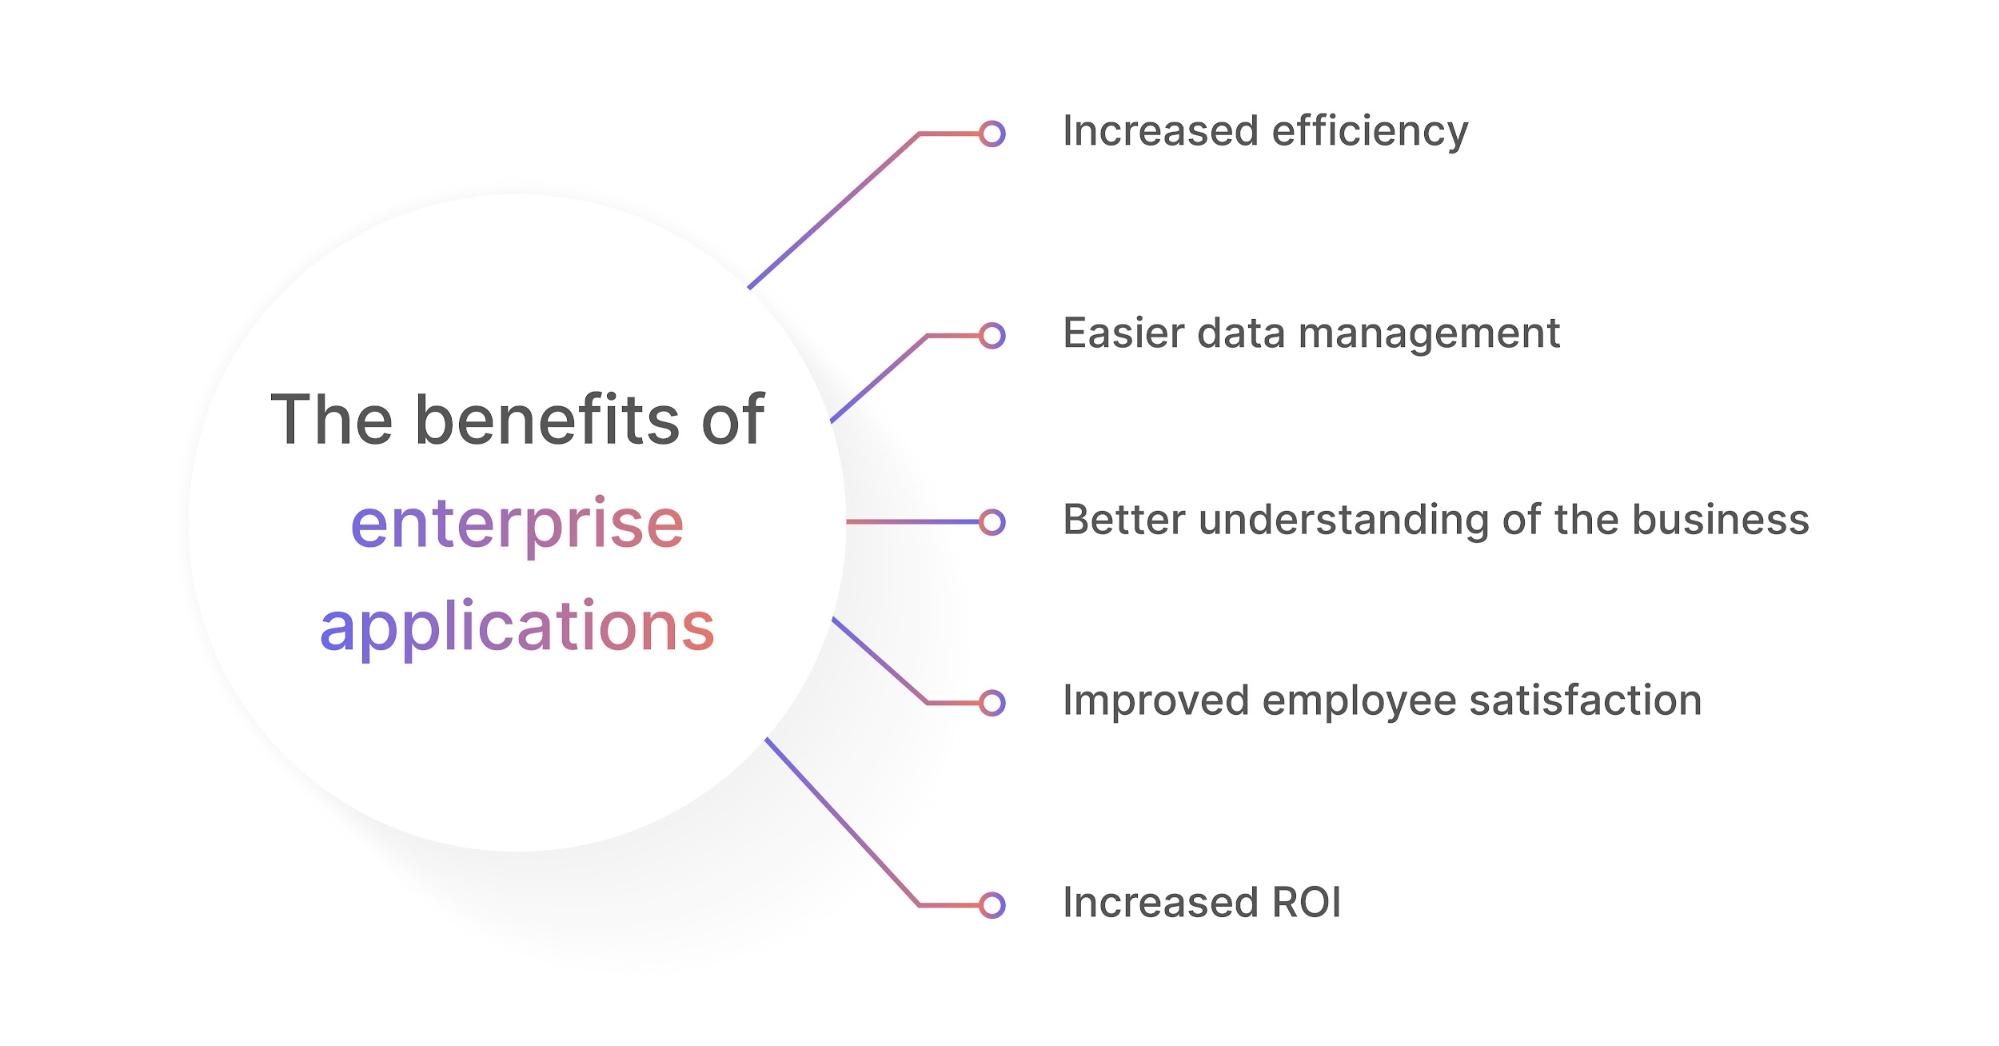 Building enterprise applications - radial list detailing the benefits of enterprise applications